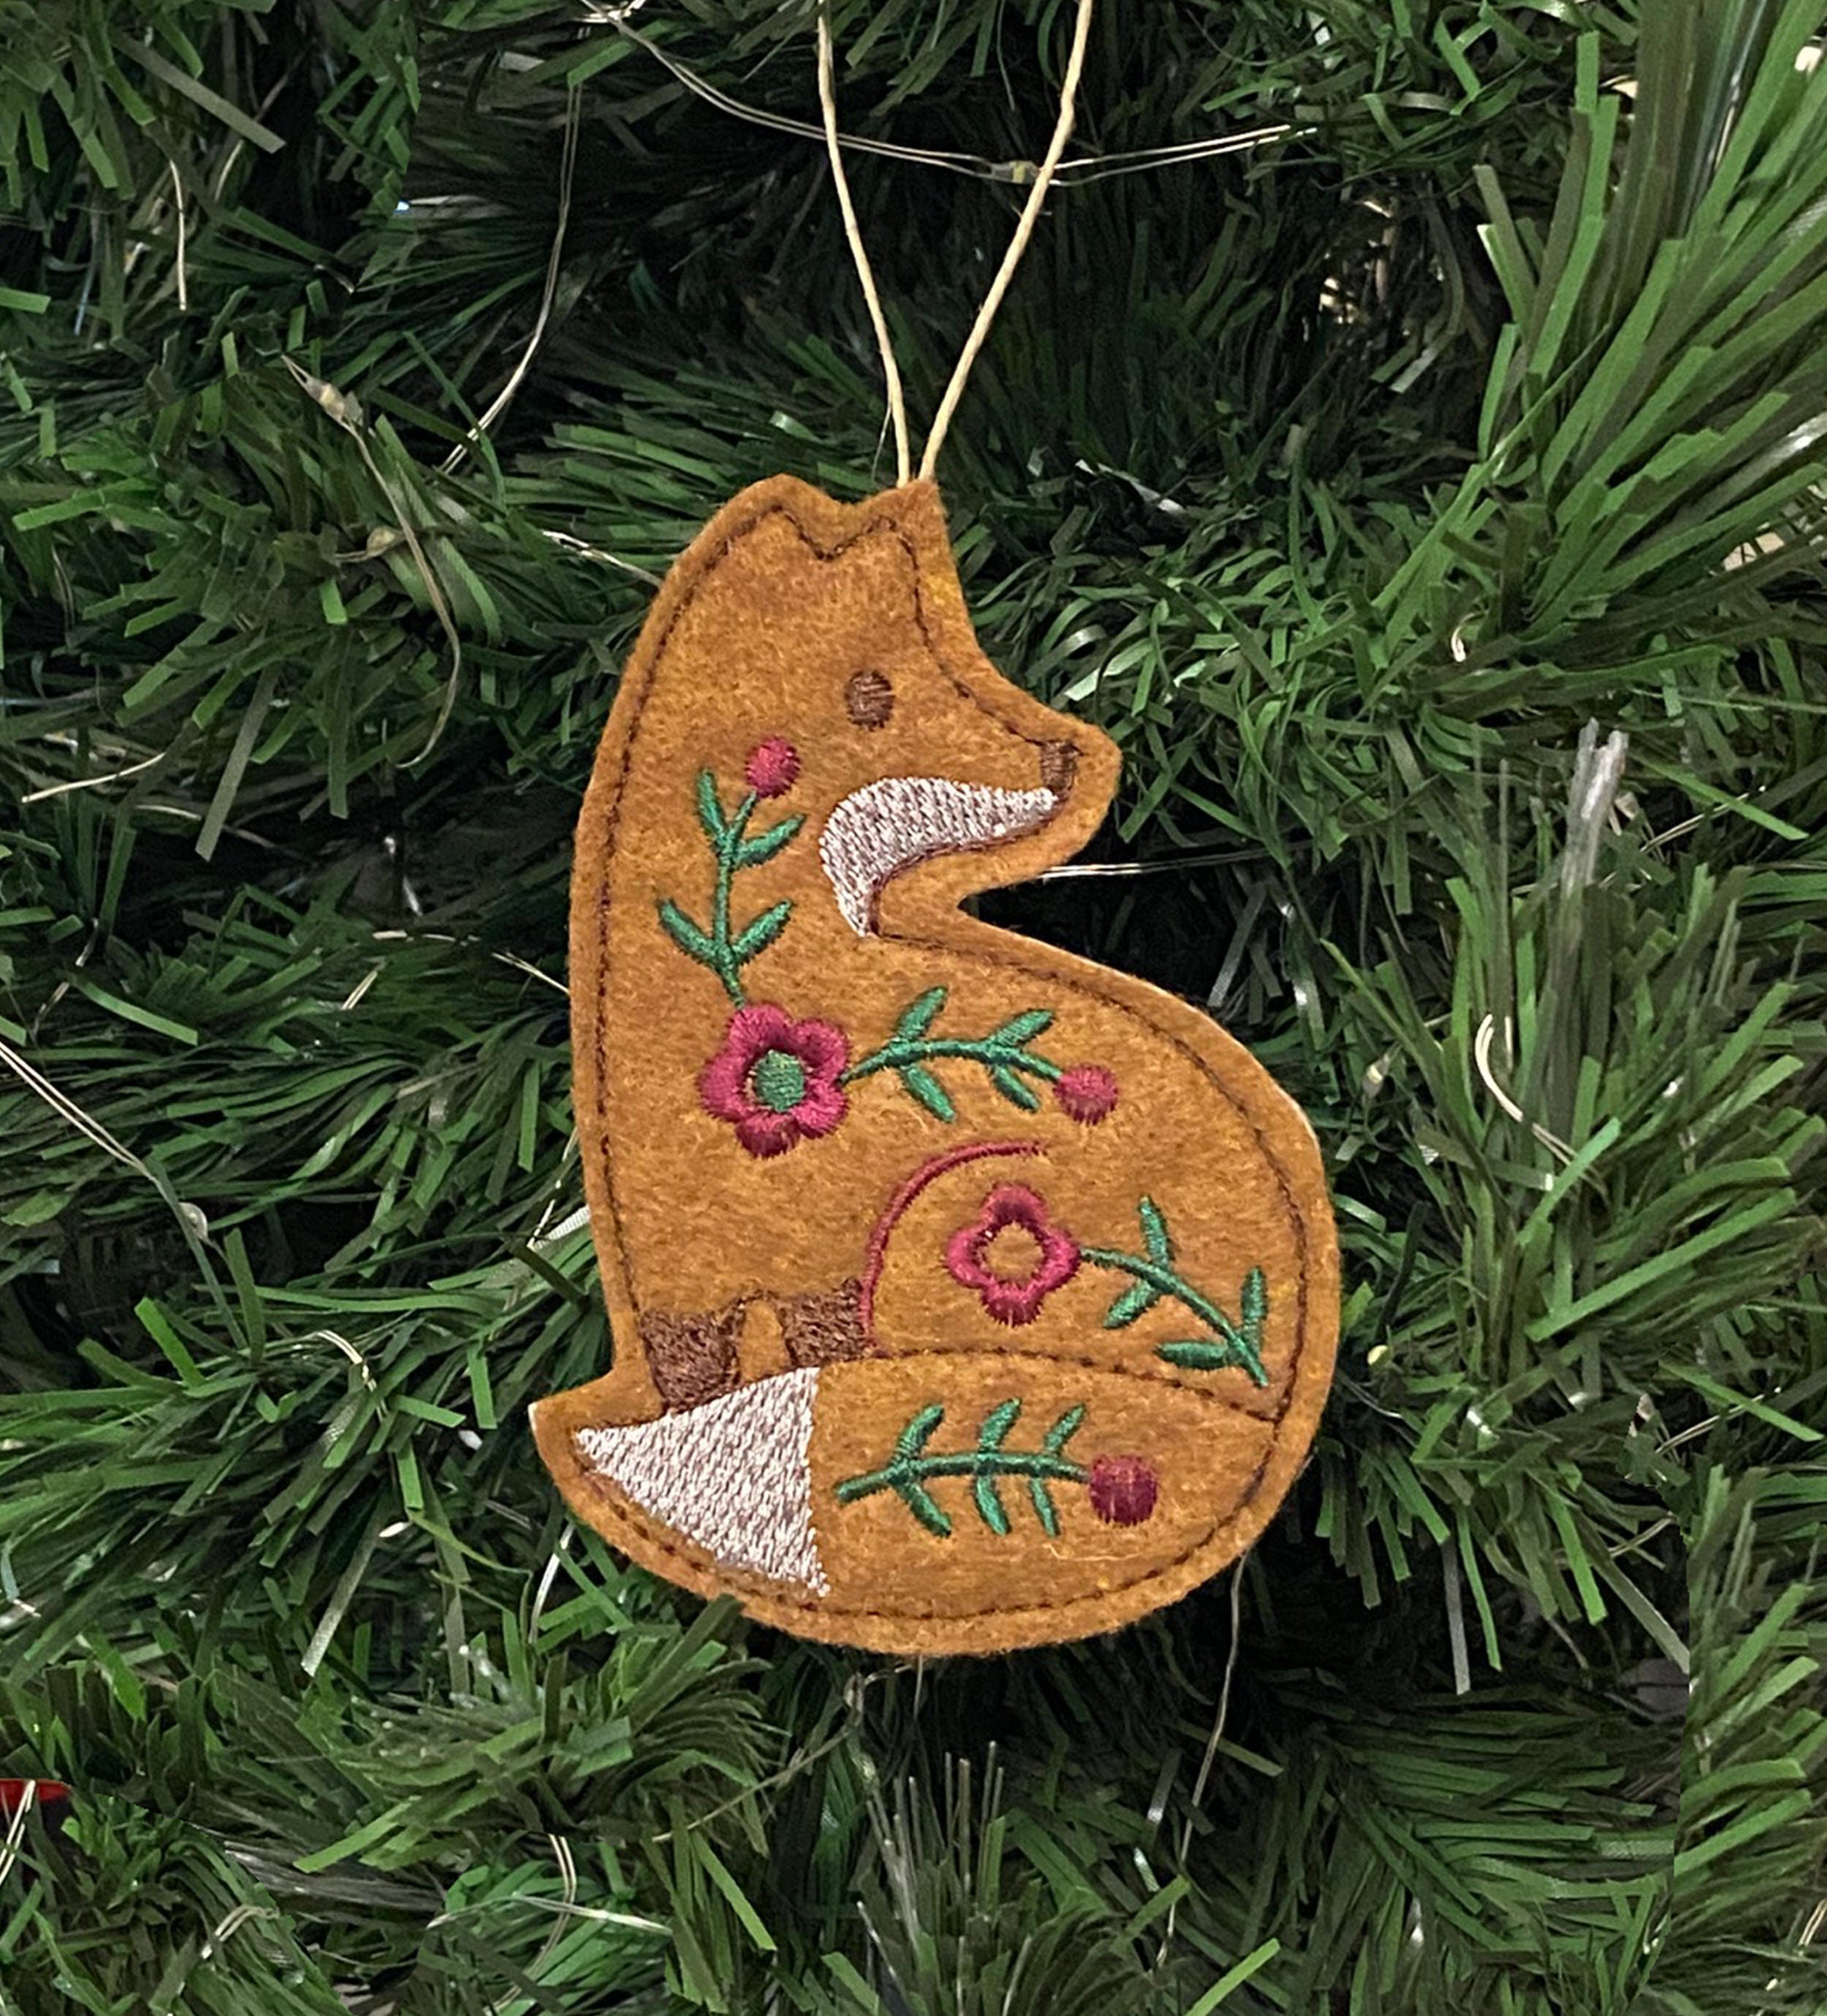 Woodland Christmas Felt Coaster Set of 4 – Tandem For Two, LLC